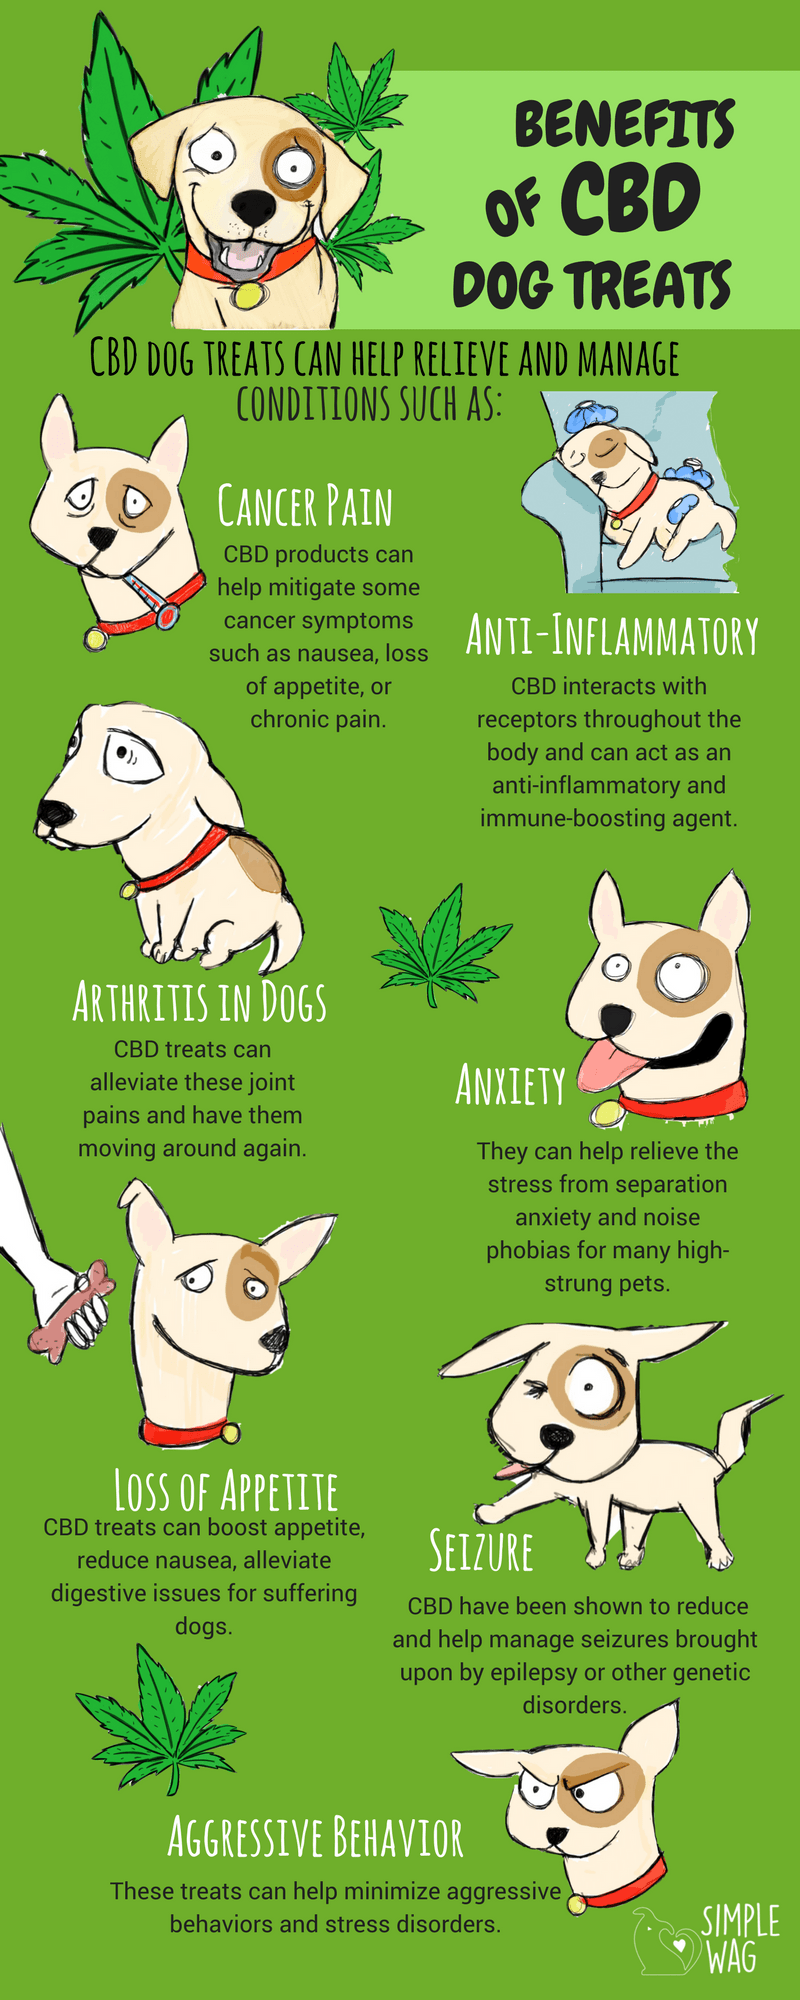 Benefits of CBD Dog Treats - Daily Infographic